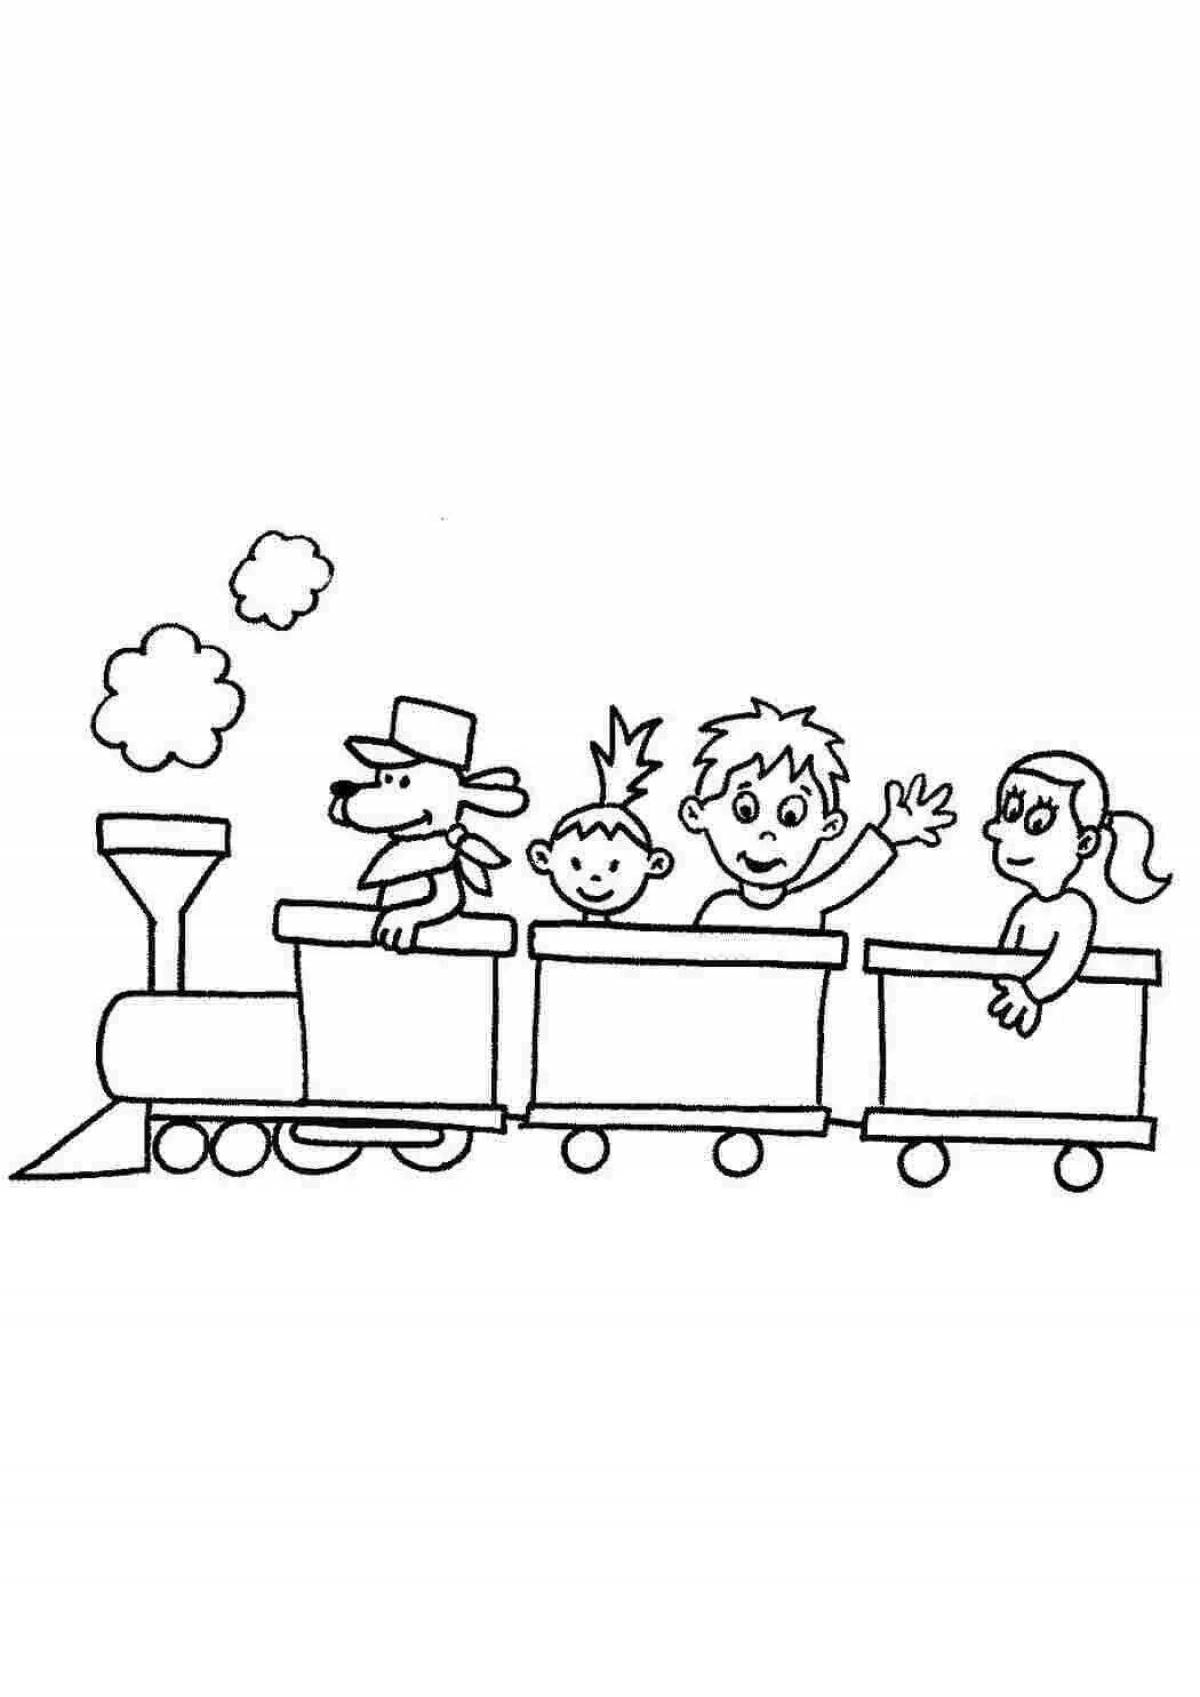 Splendid train with wagon